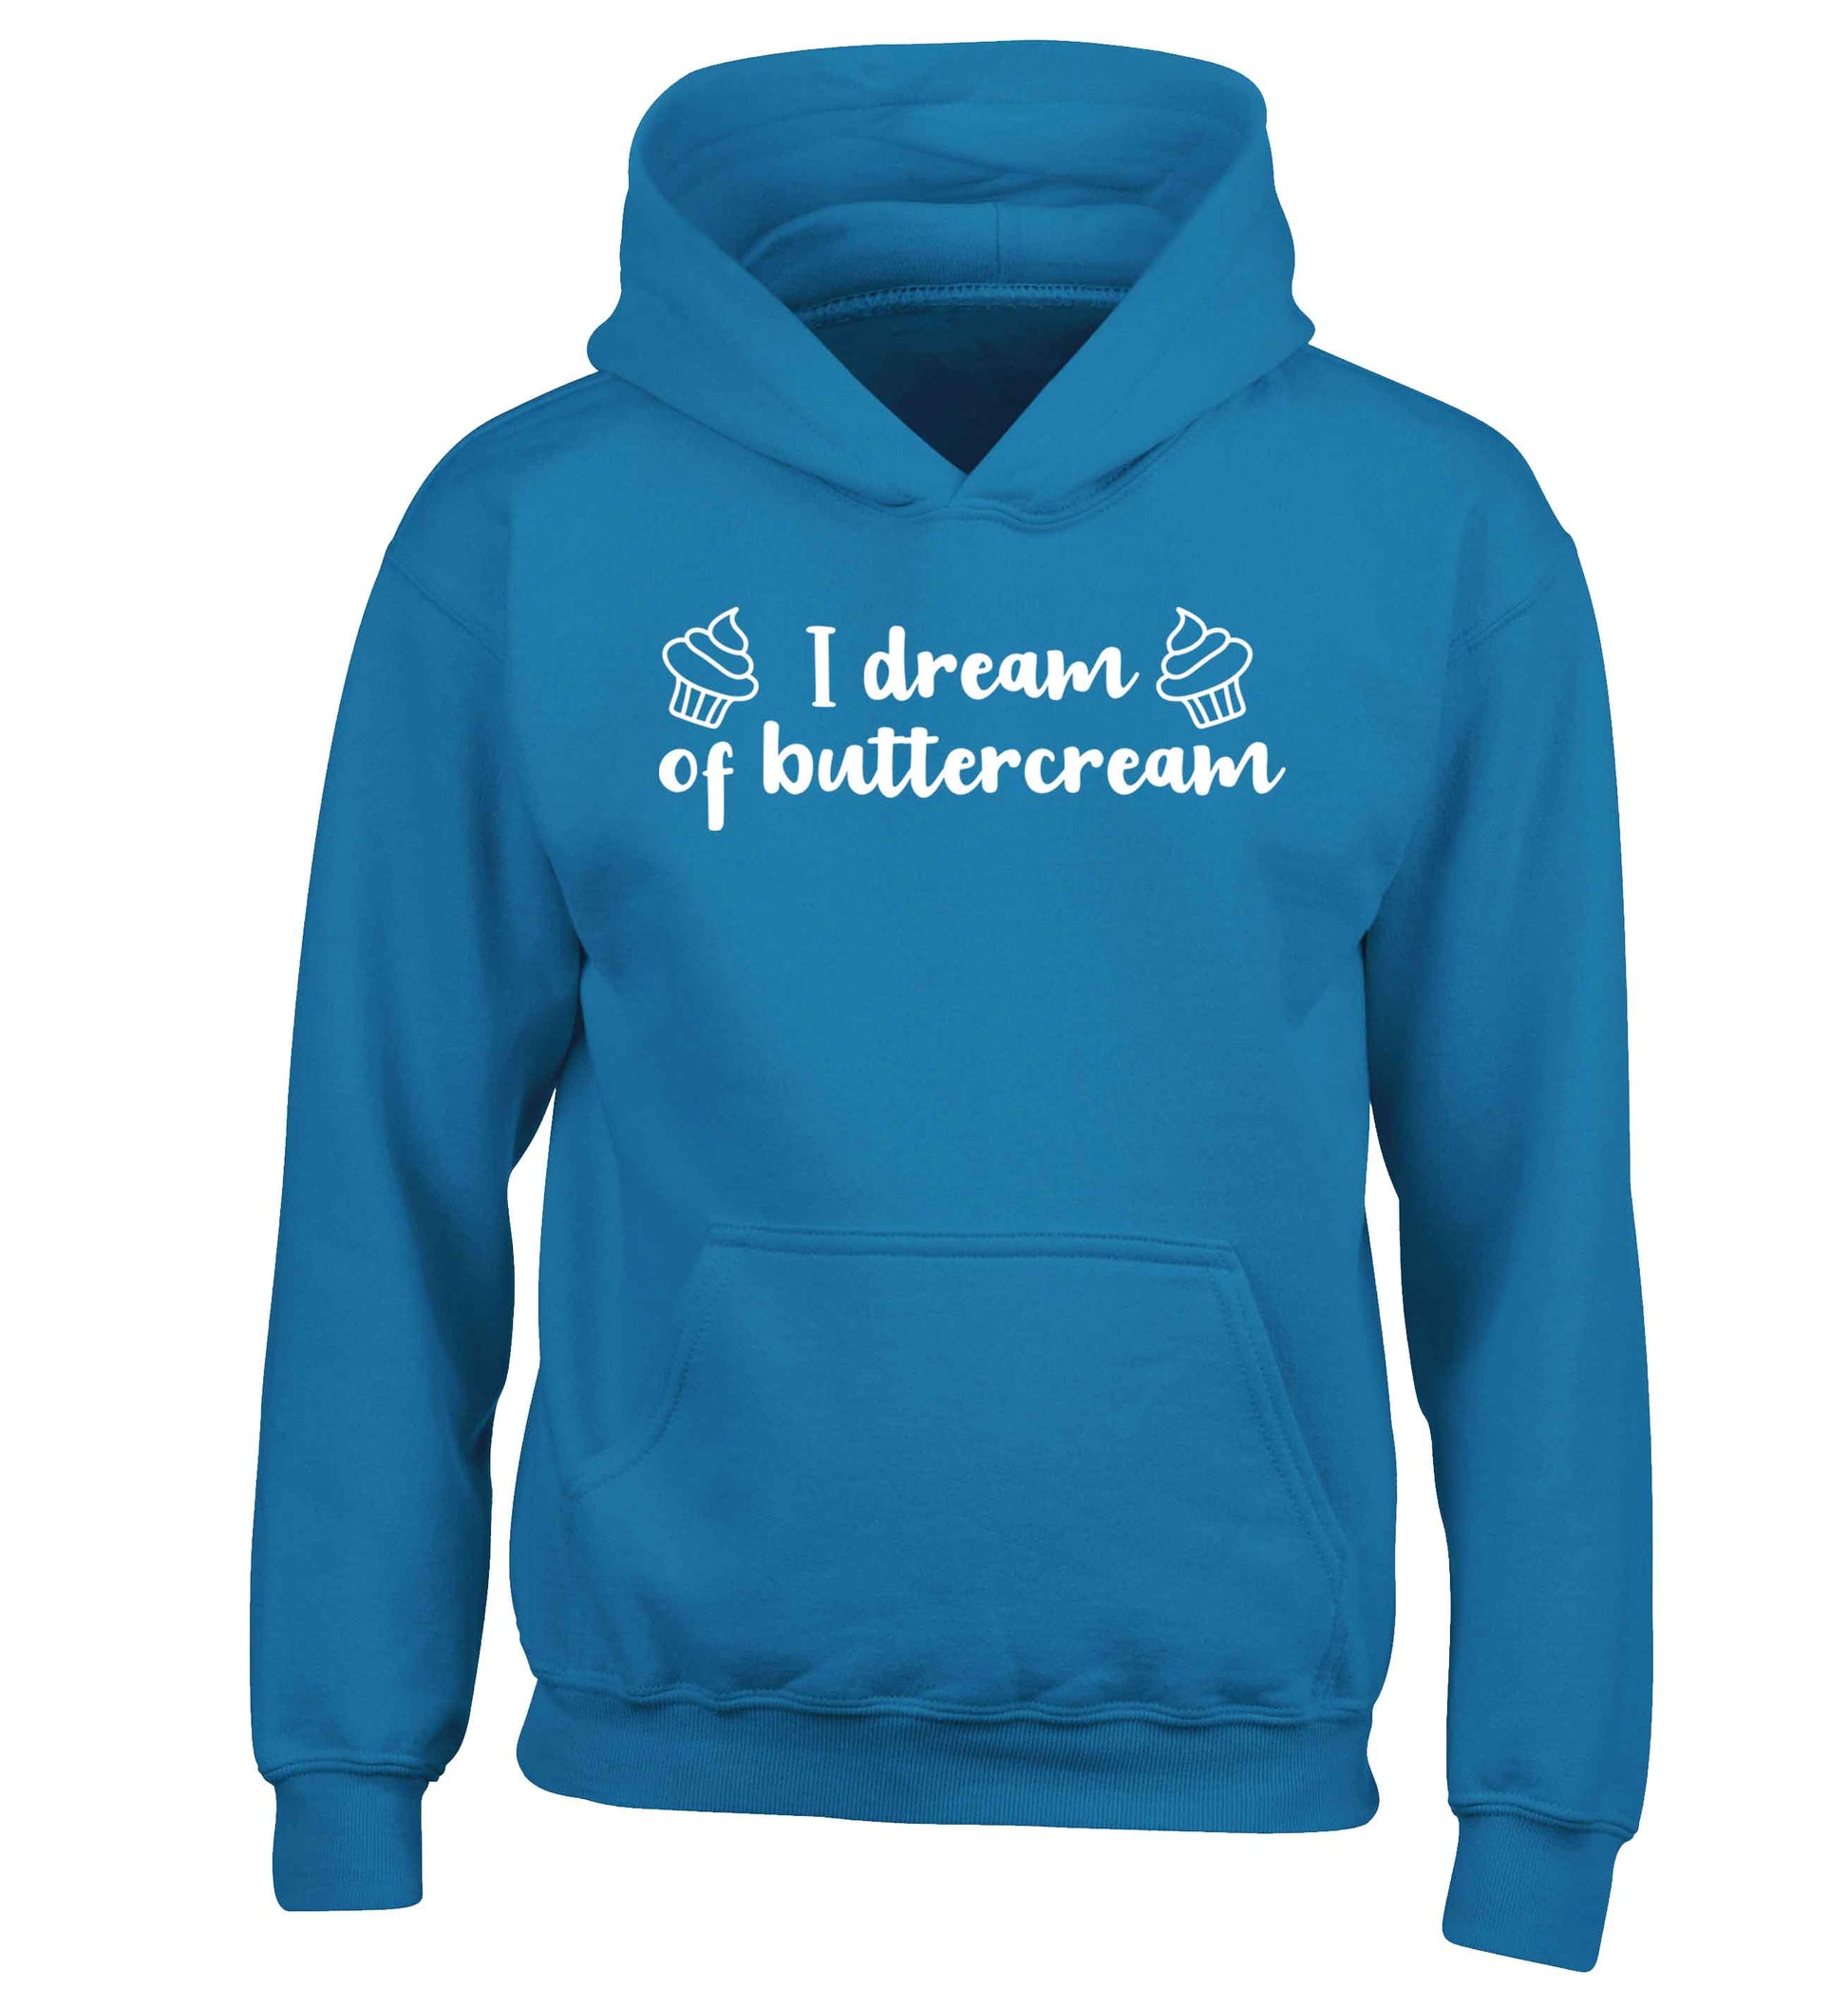 I dream of buttercream children's blue hoodie 12-13 Years